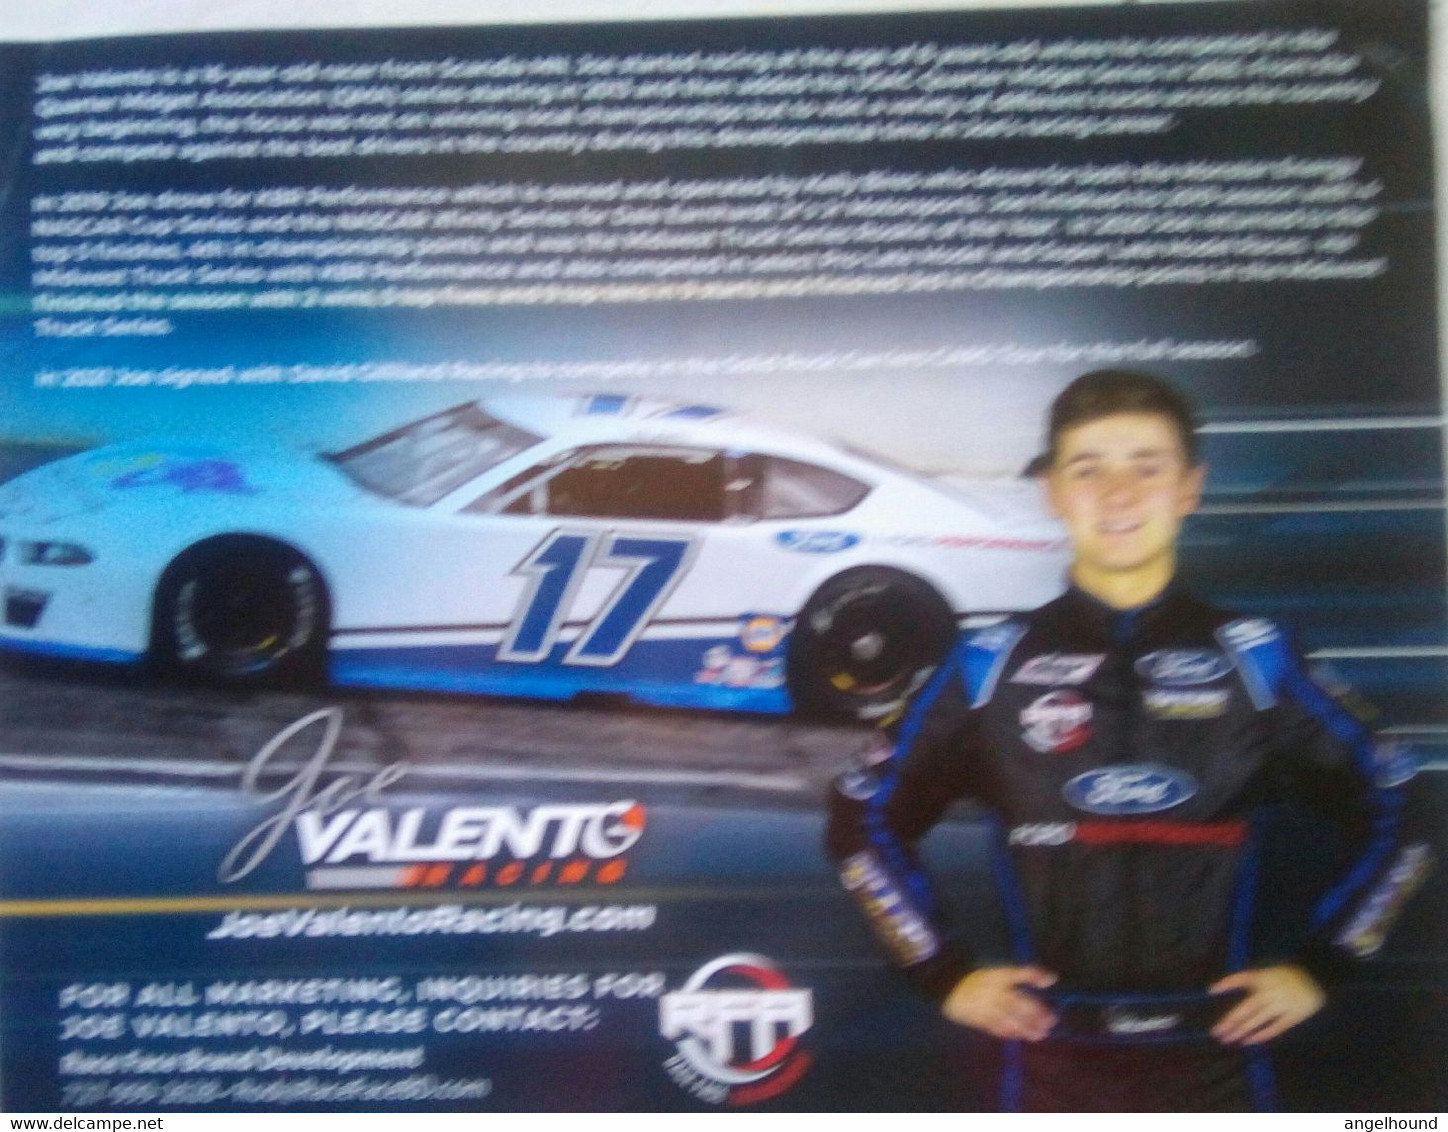 Joe Valento ( American Race Car Driver) - Handtekening